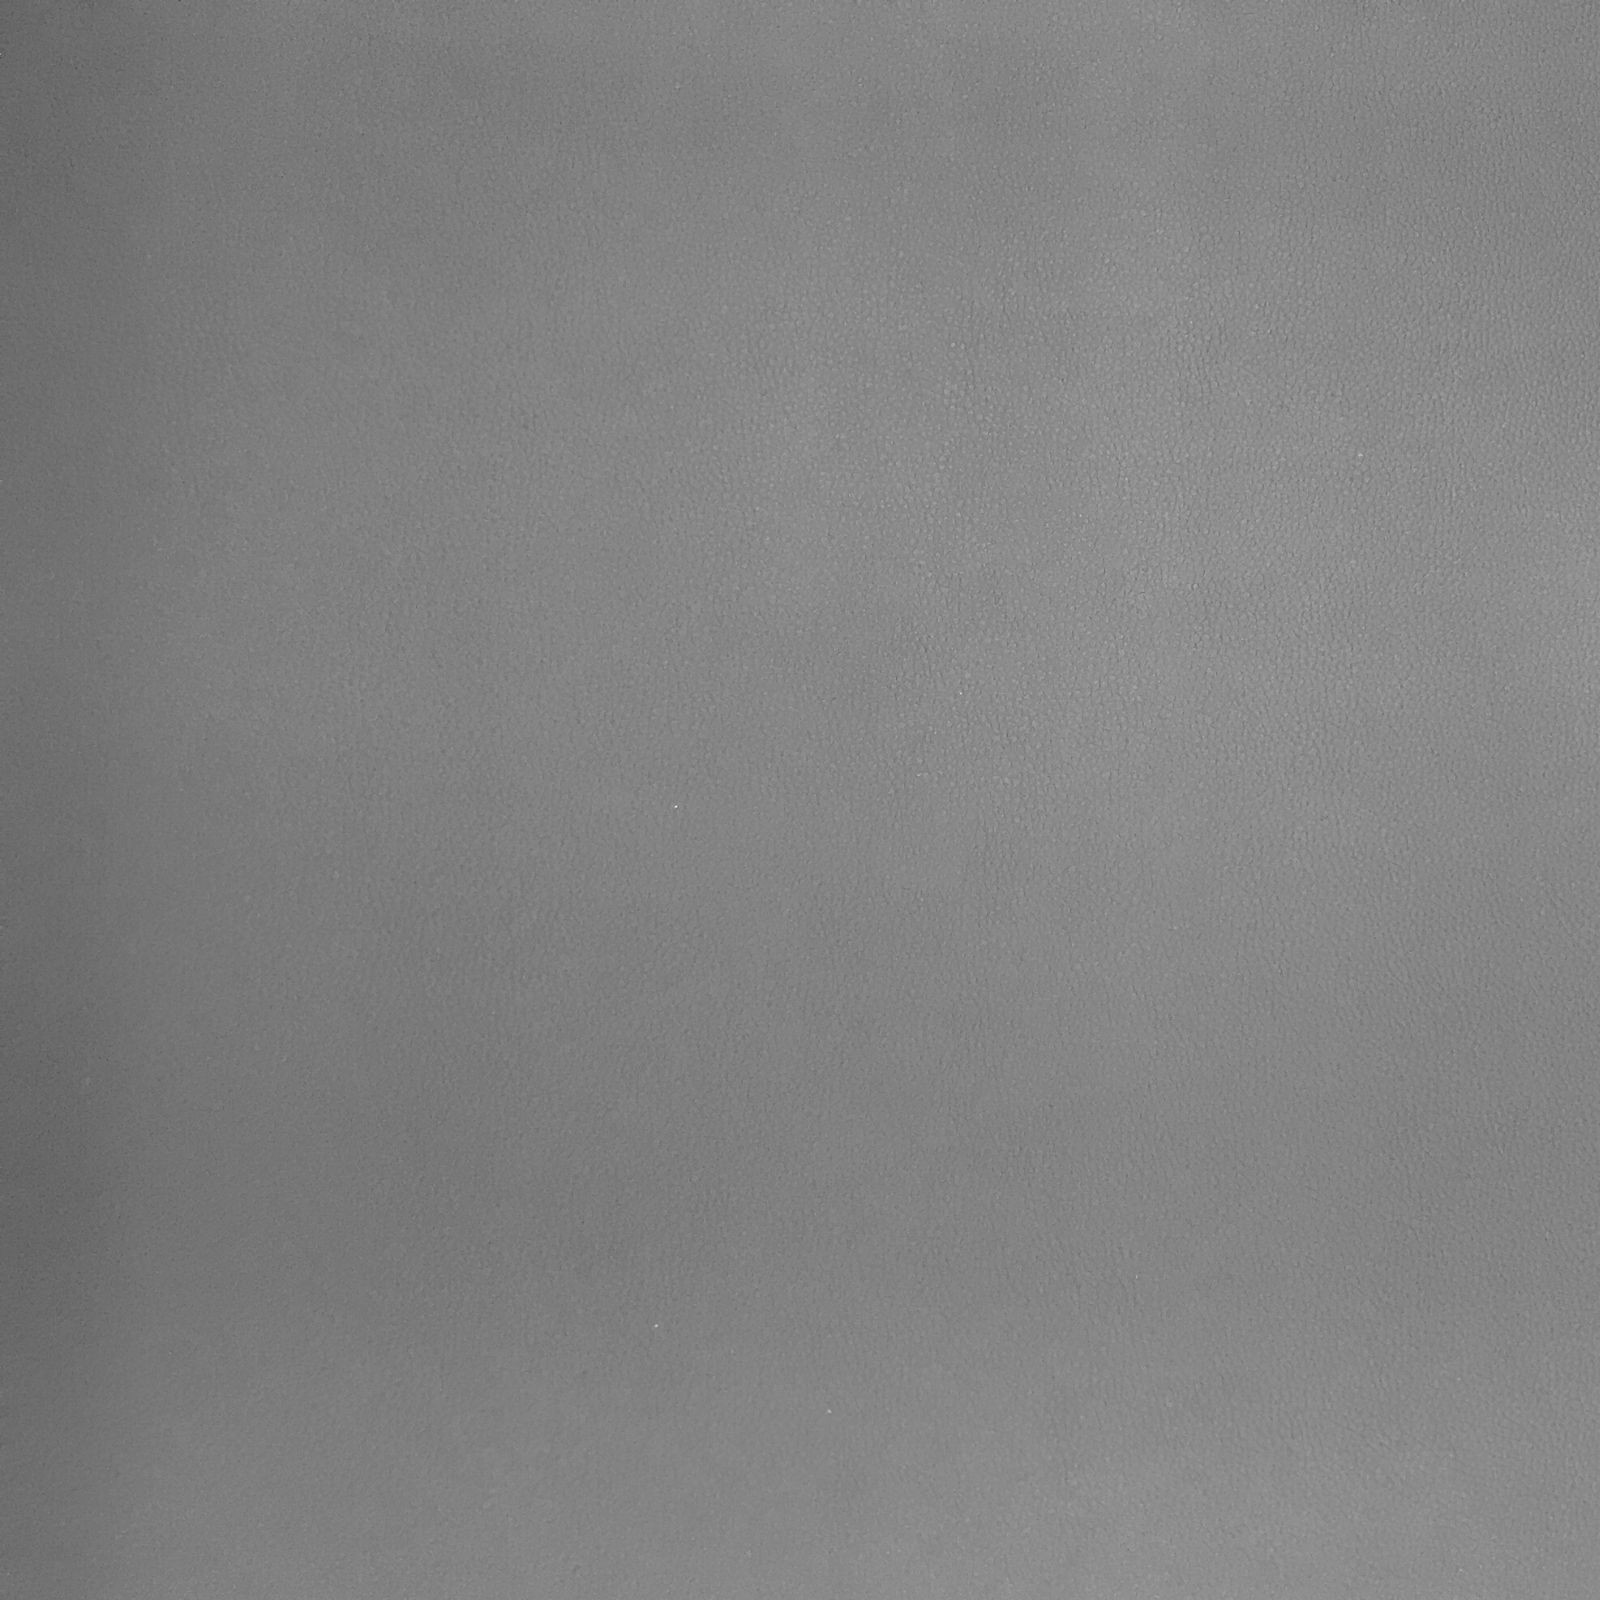 Échantillon Simili Cuir 013 - 9 x 11 cm